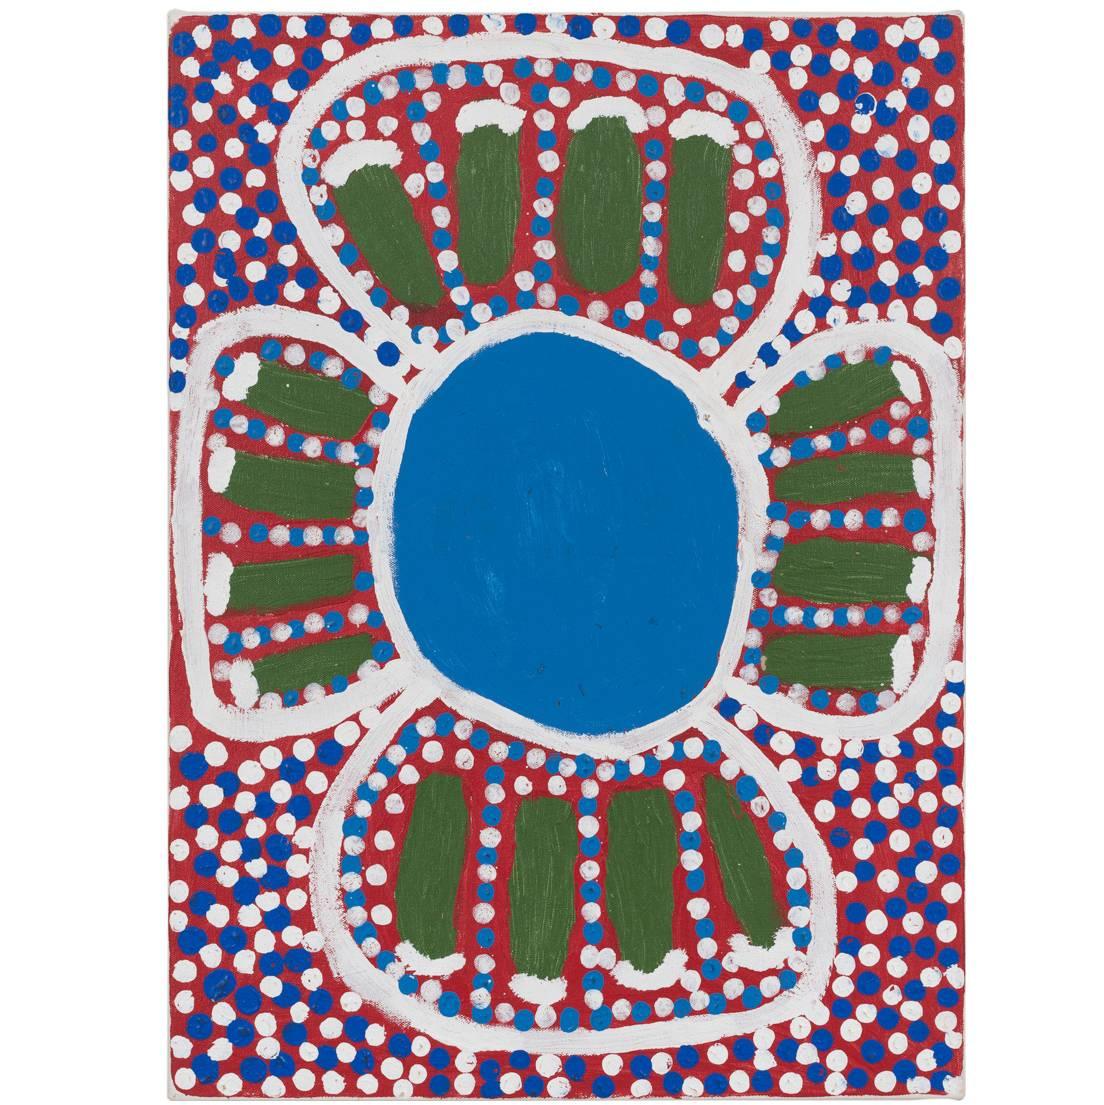 Small Australian Aboriginal Painting of Desert Spring and Vegetation For Sale